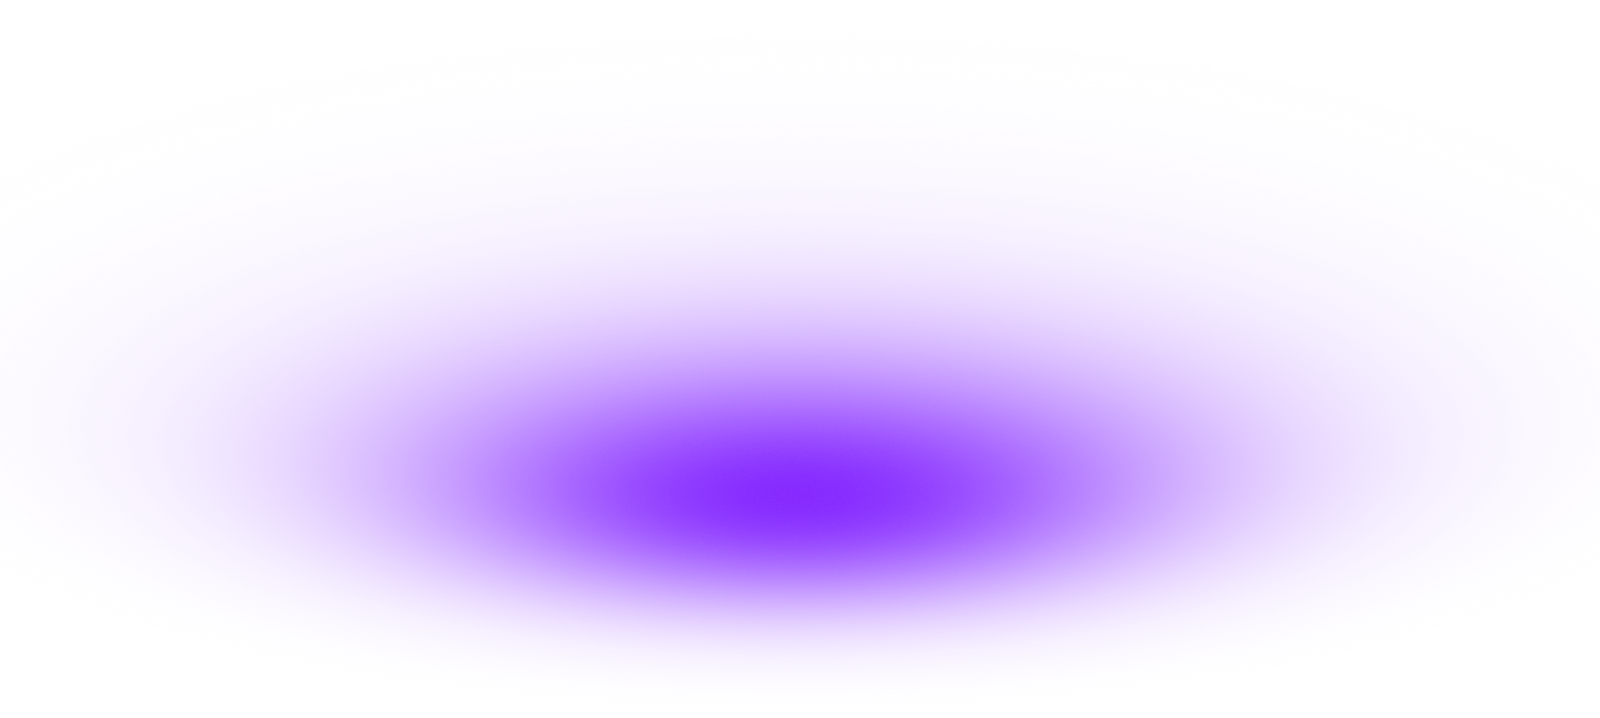 Purple light gradient fades